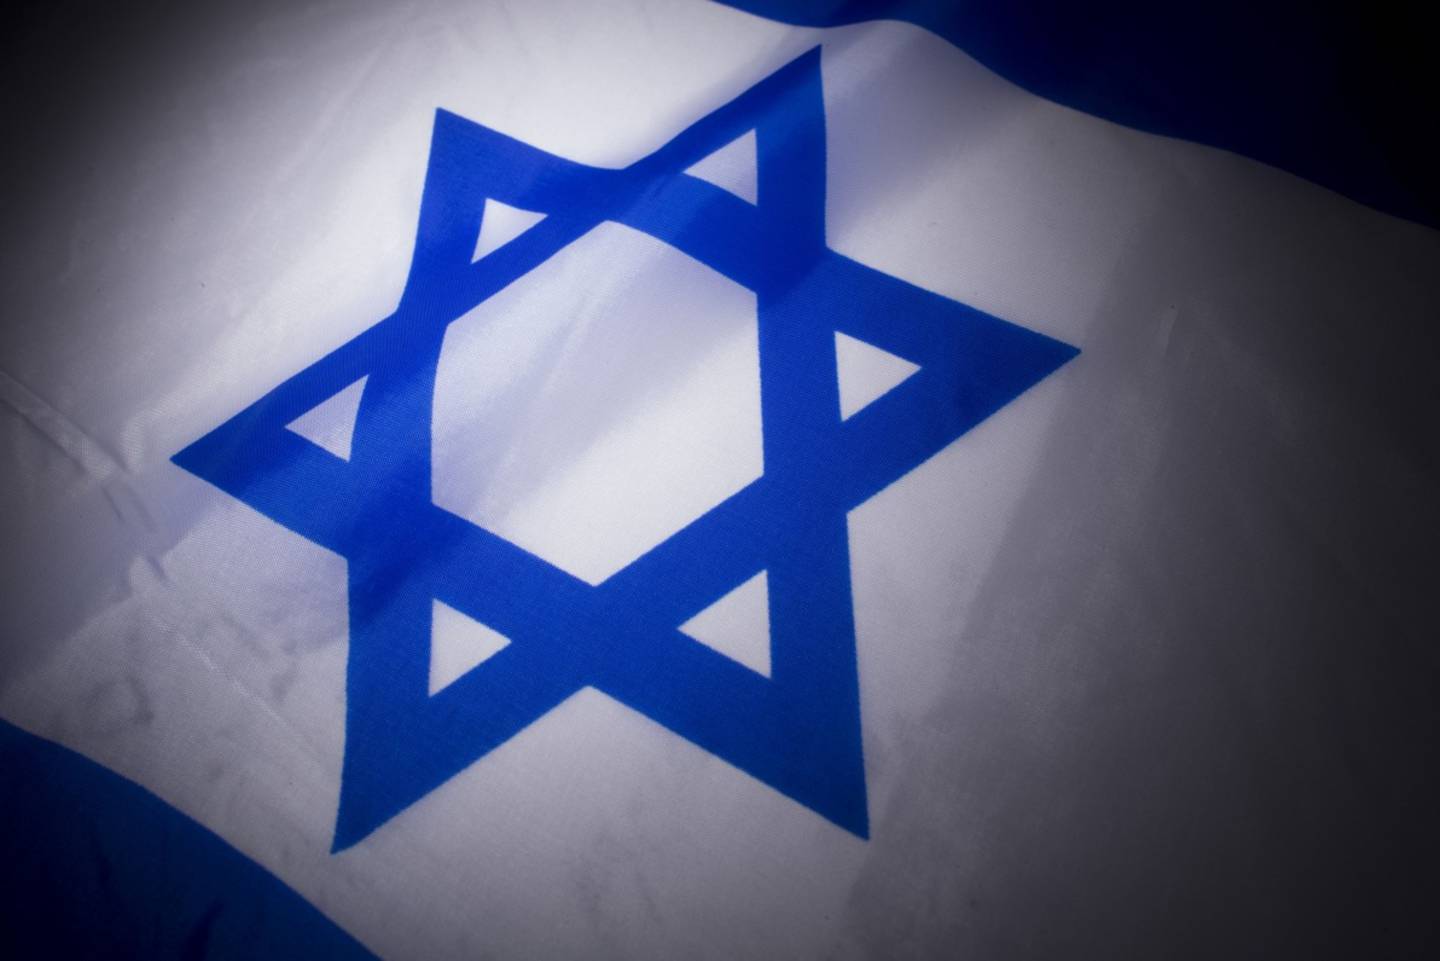 La bandera de Israel arreglada para fotogrfía en Nueva York, EE. UU., el miércoels 19 de febrero,2014. Fotógrafo: Scott Eells/Bloomberg